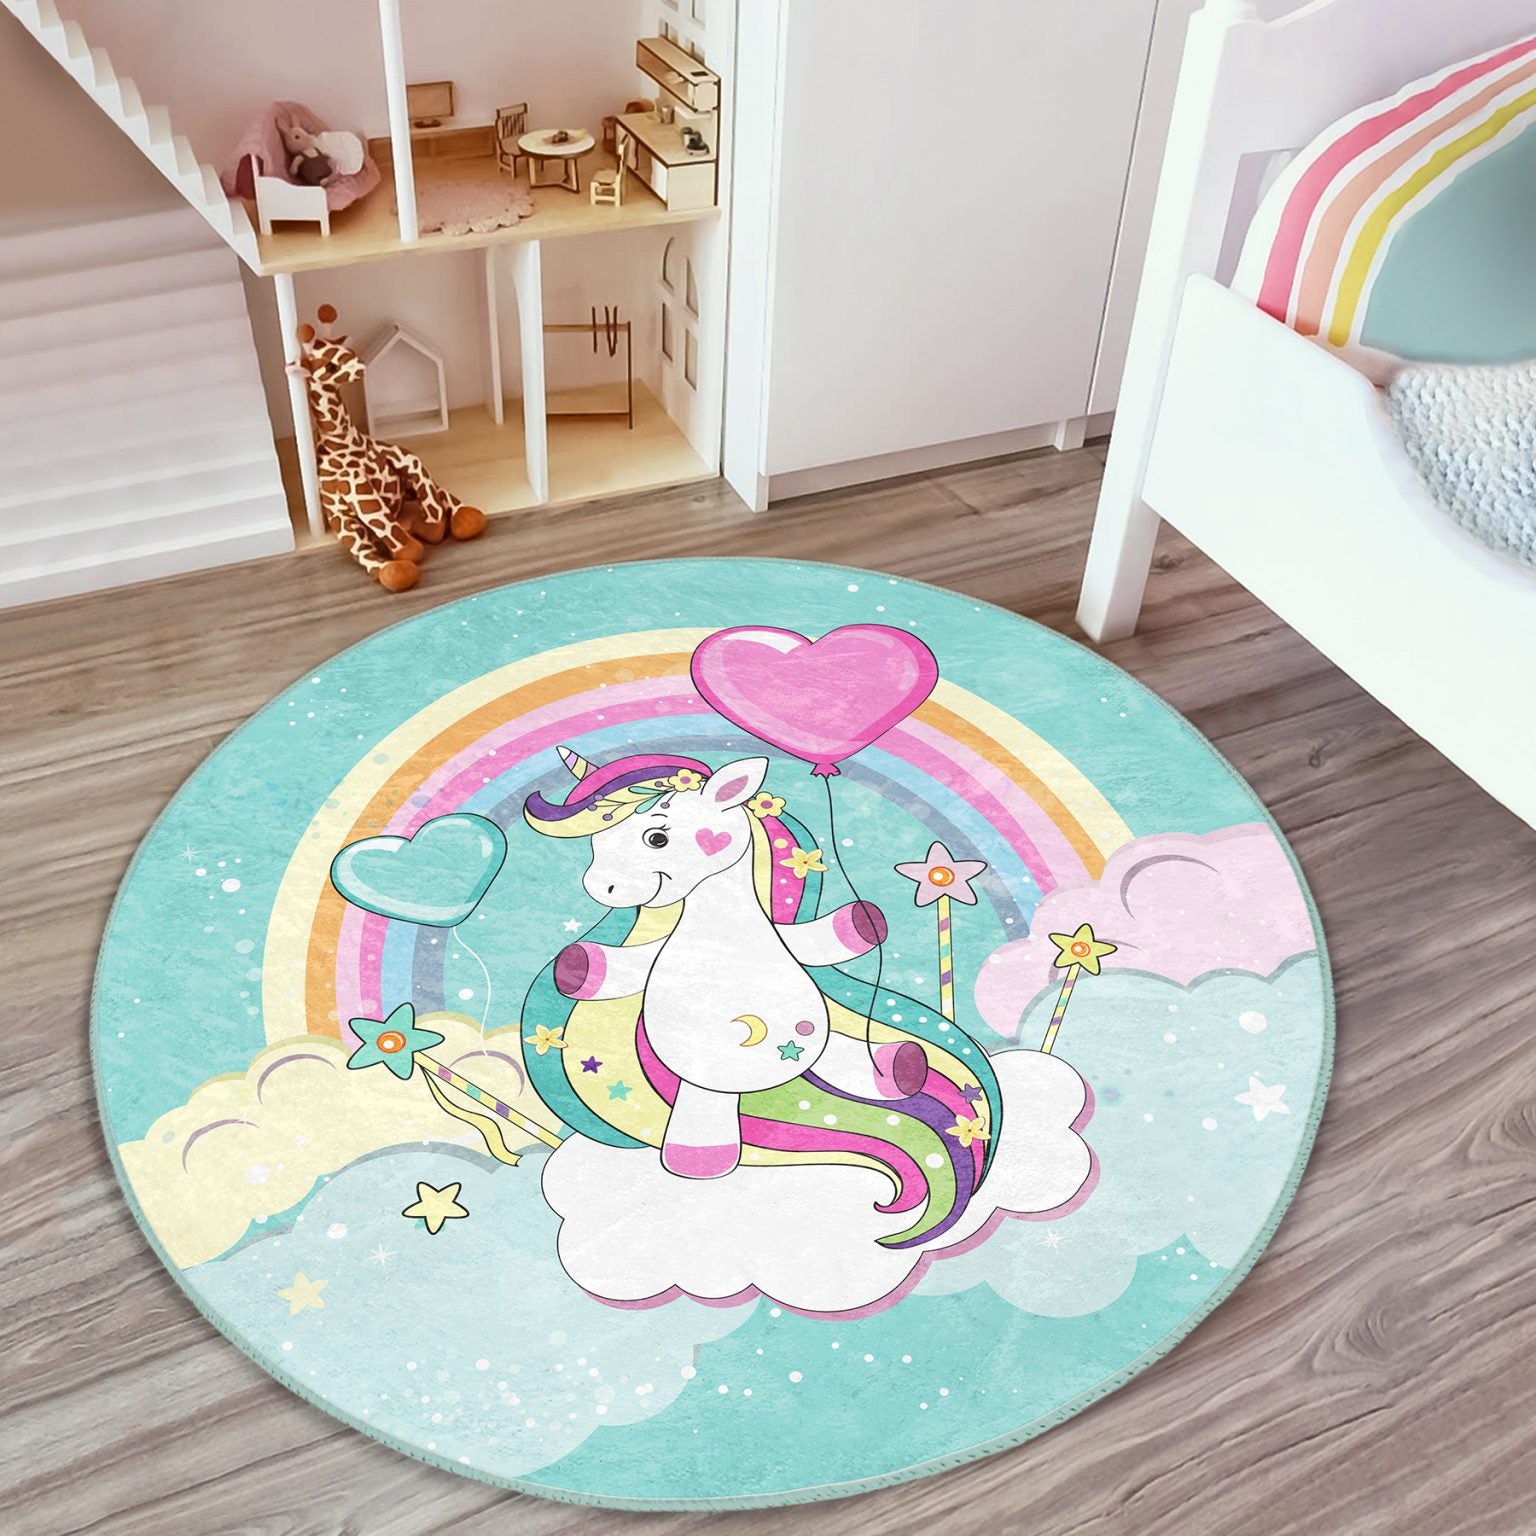 Soft and Sweet Unicorn Room Carpet